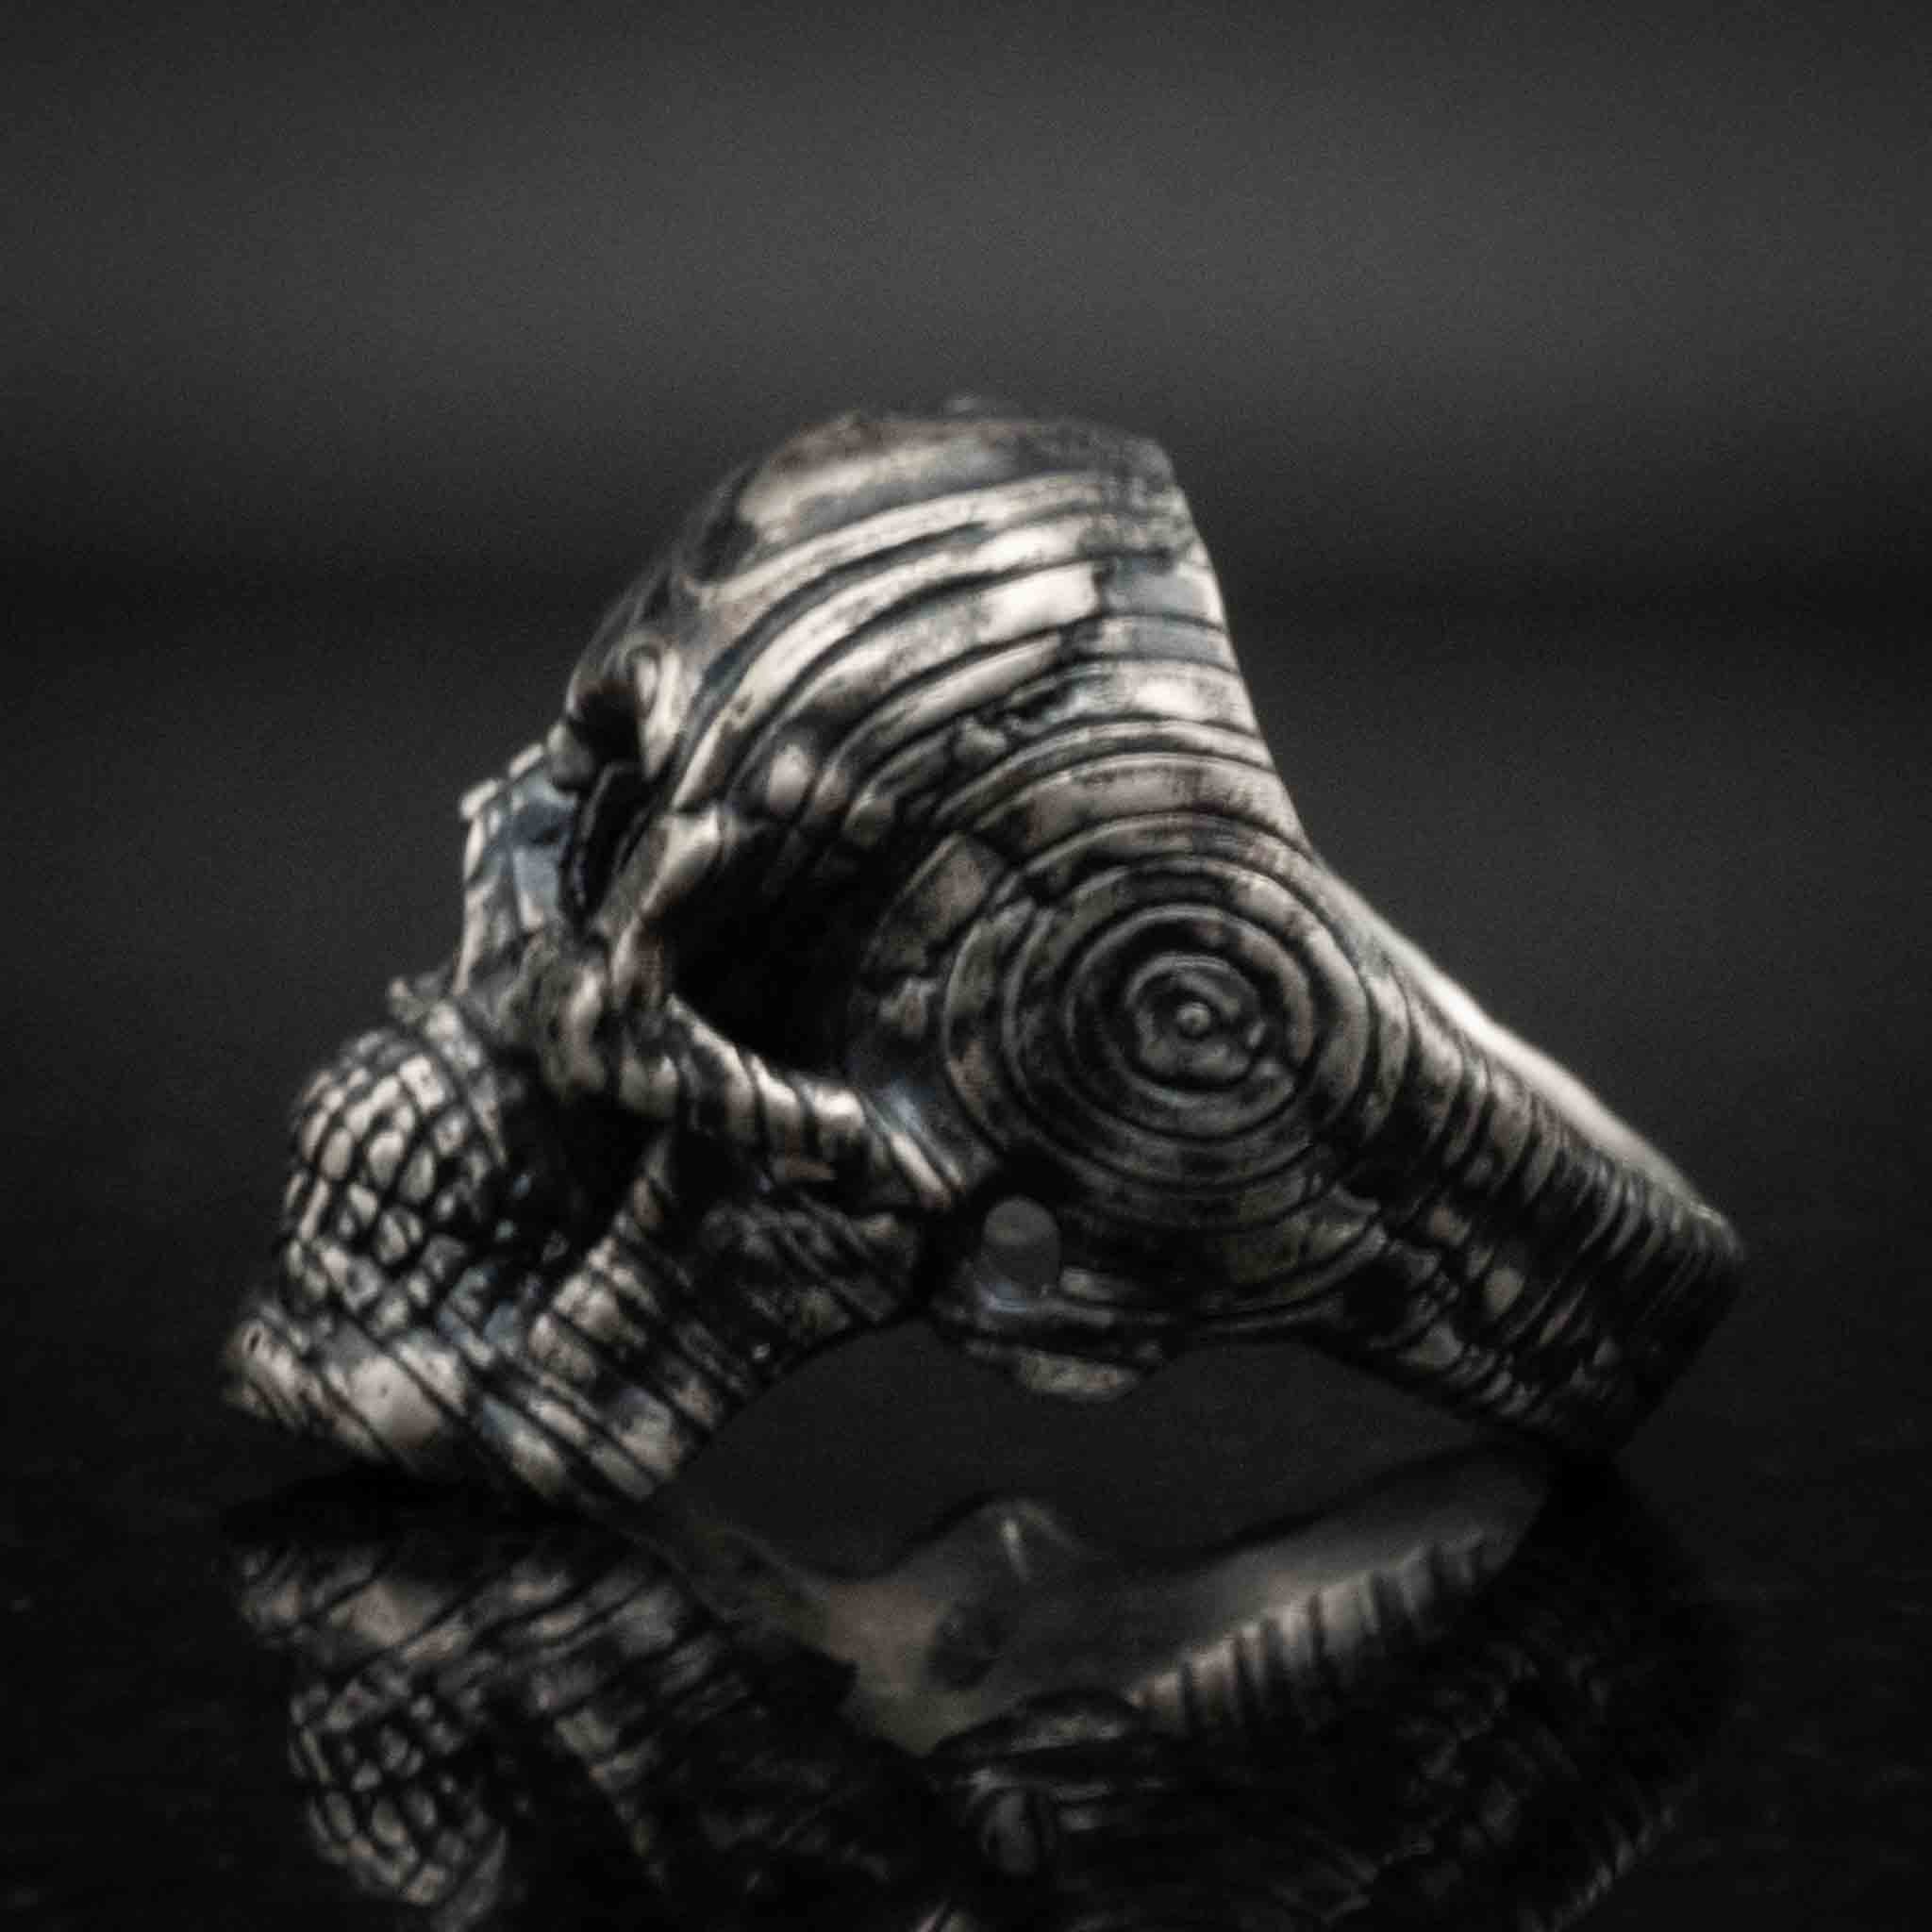 Timber Skull Ring - Sterling Silver